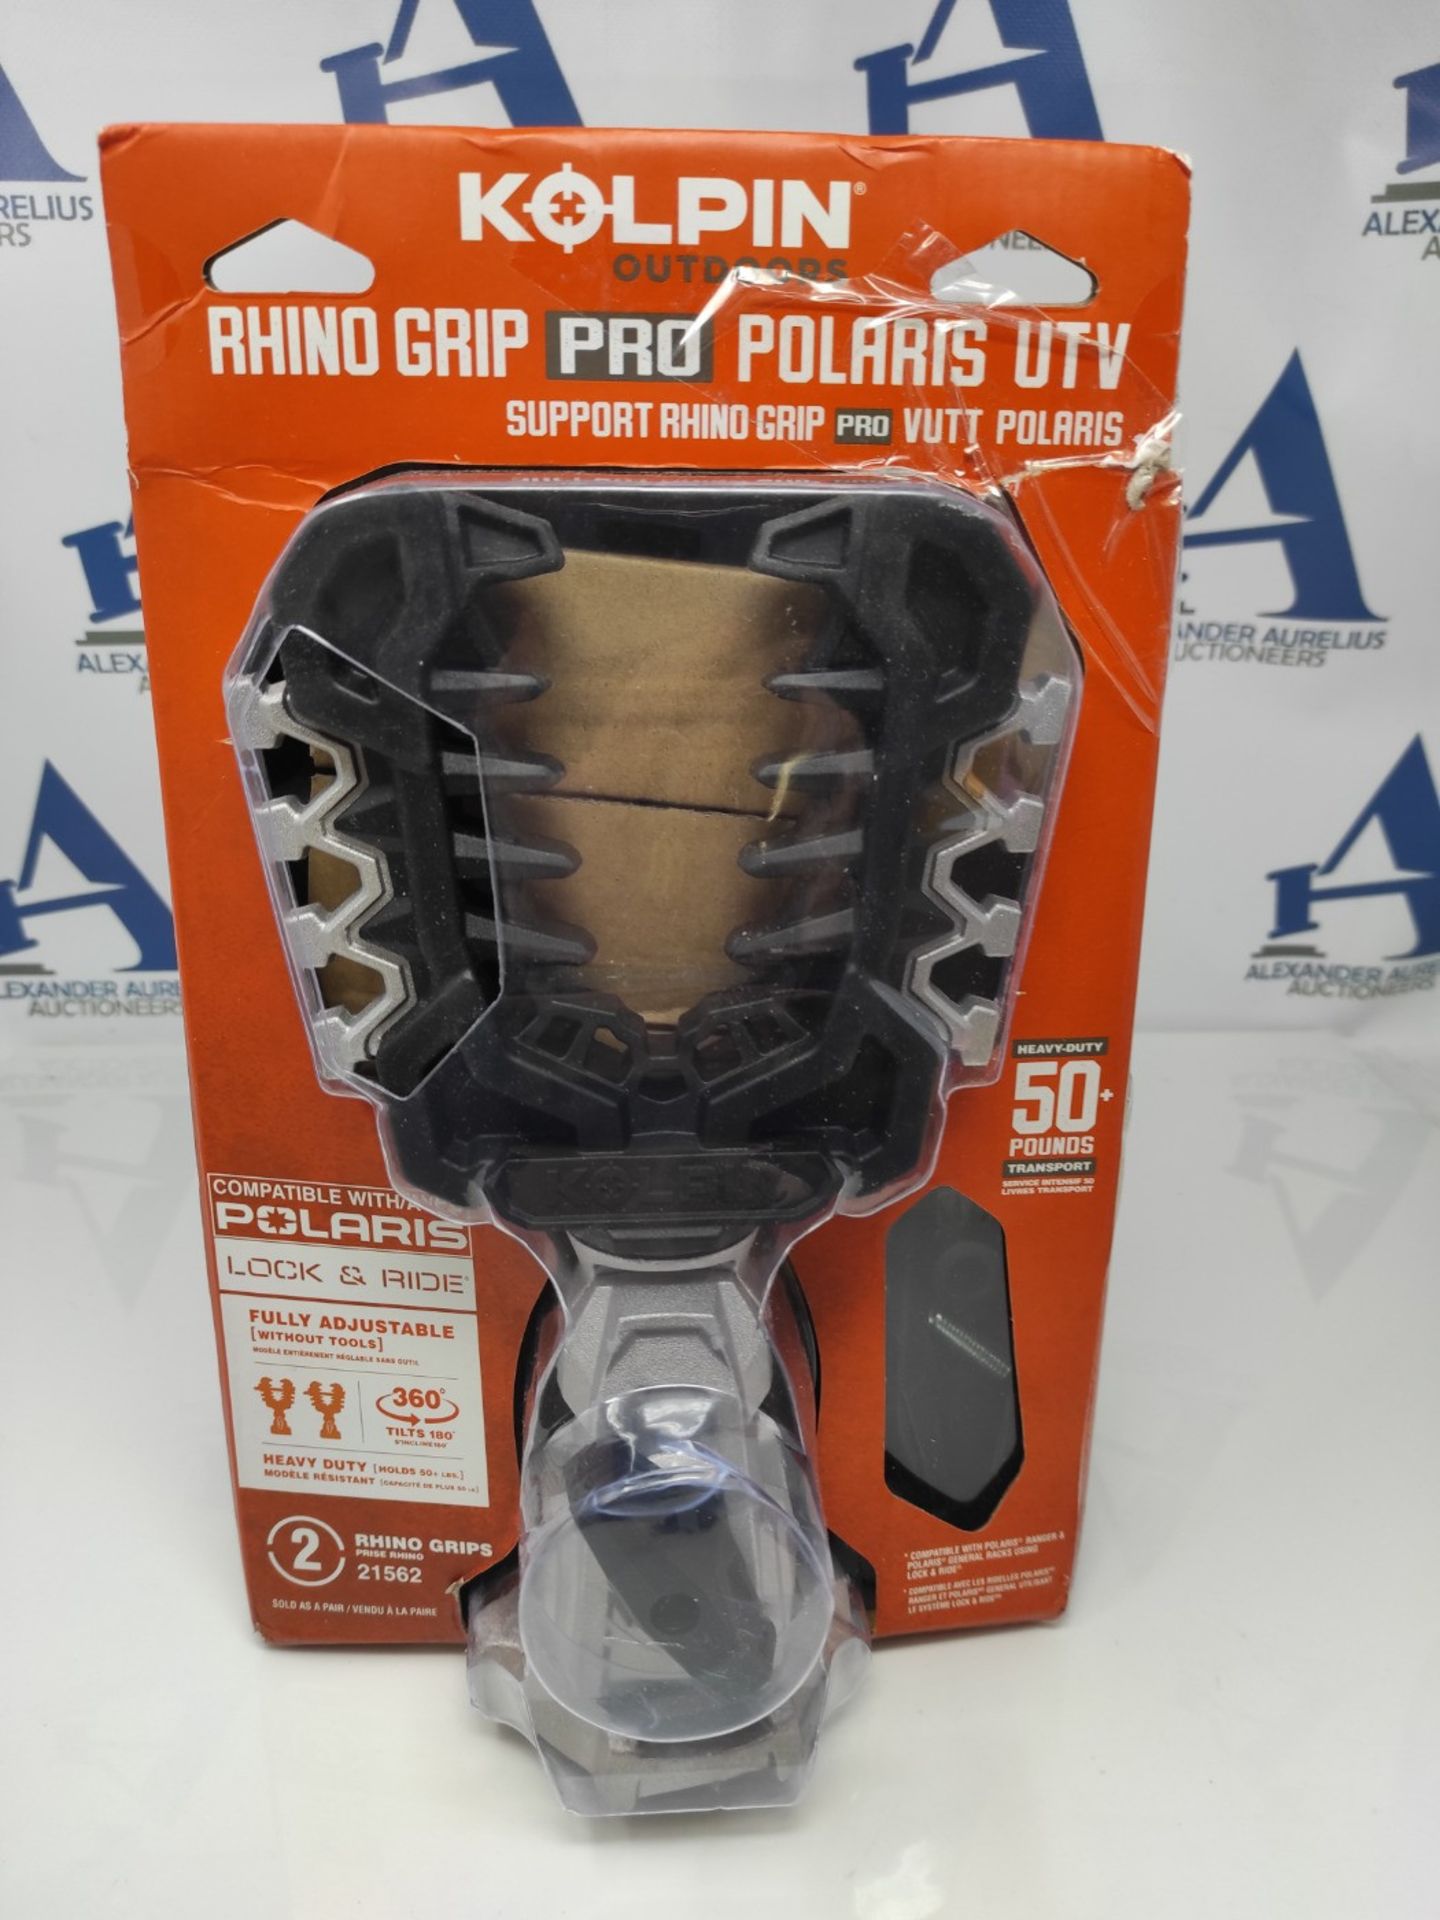 RRP £103.00 Kolpin Rhino Grip Pro - Polaris UTV (Polaris Lock & Ride compatible) - 21562, black - Image 2 of 3